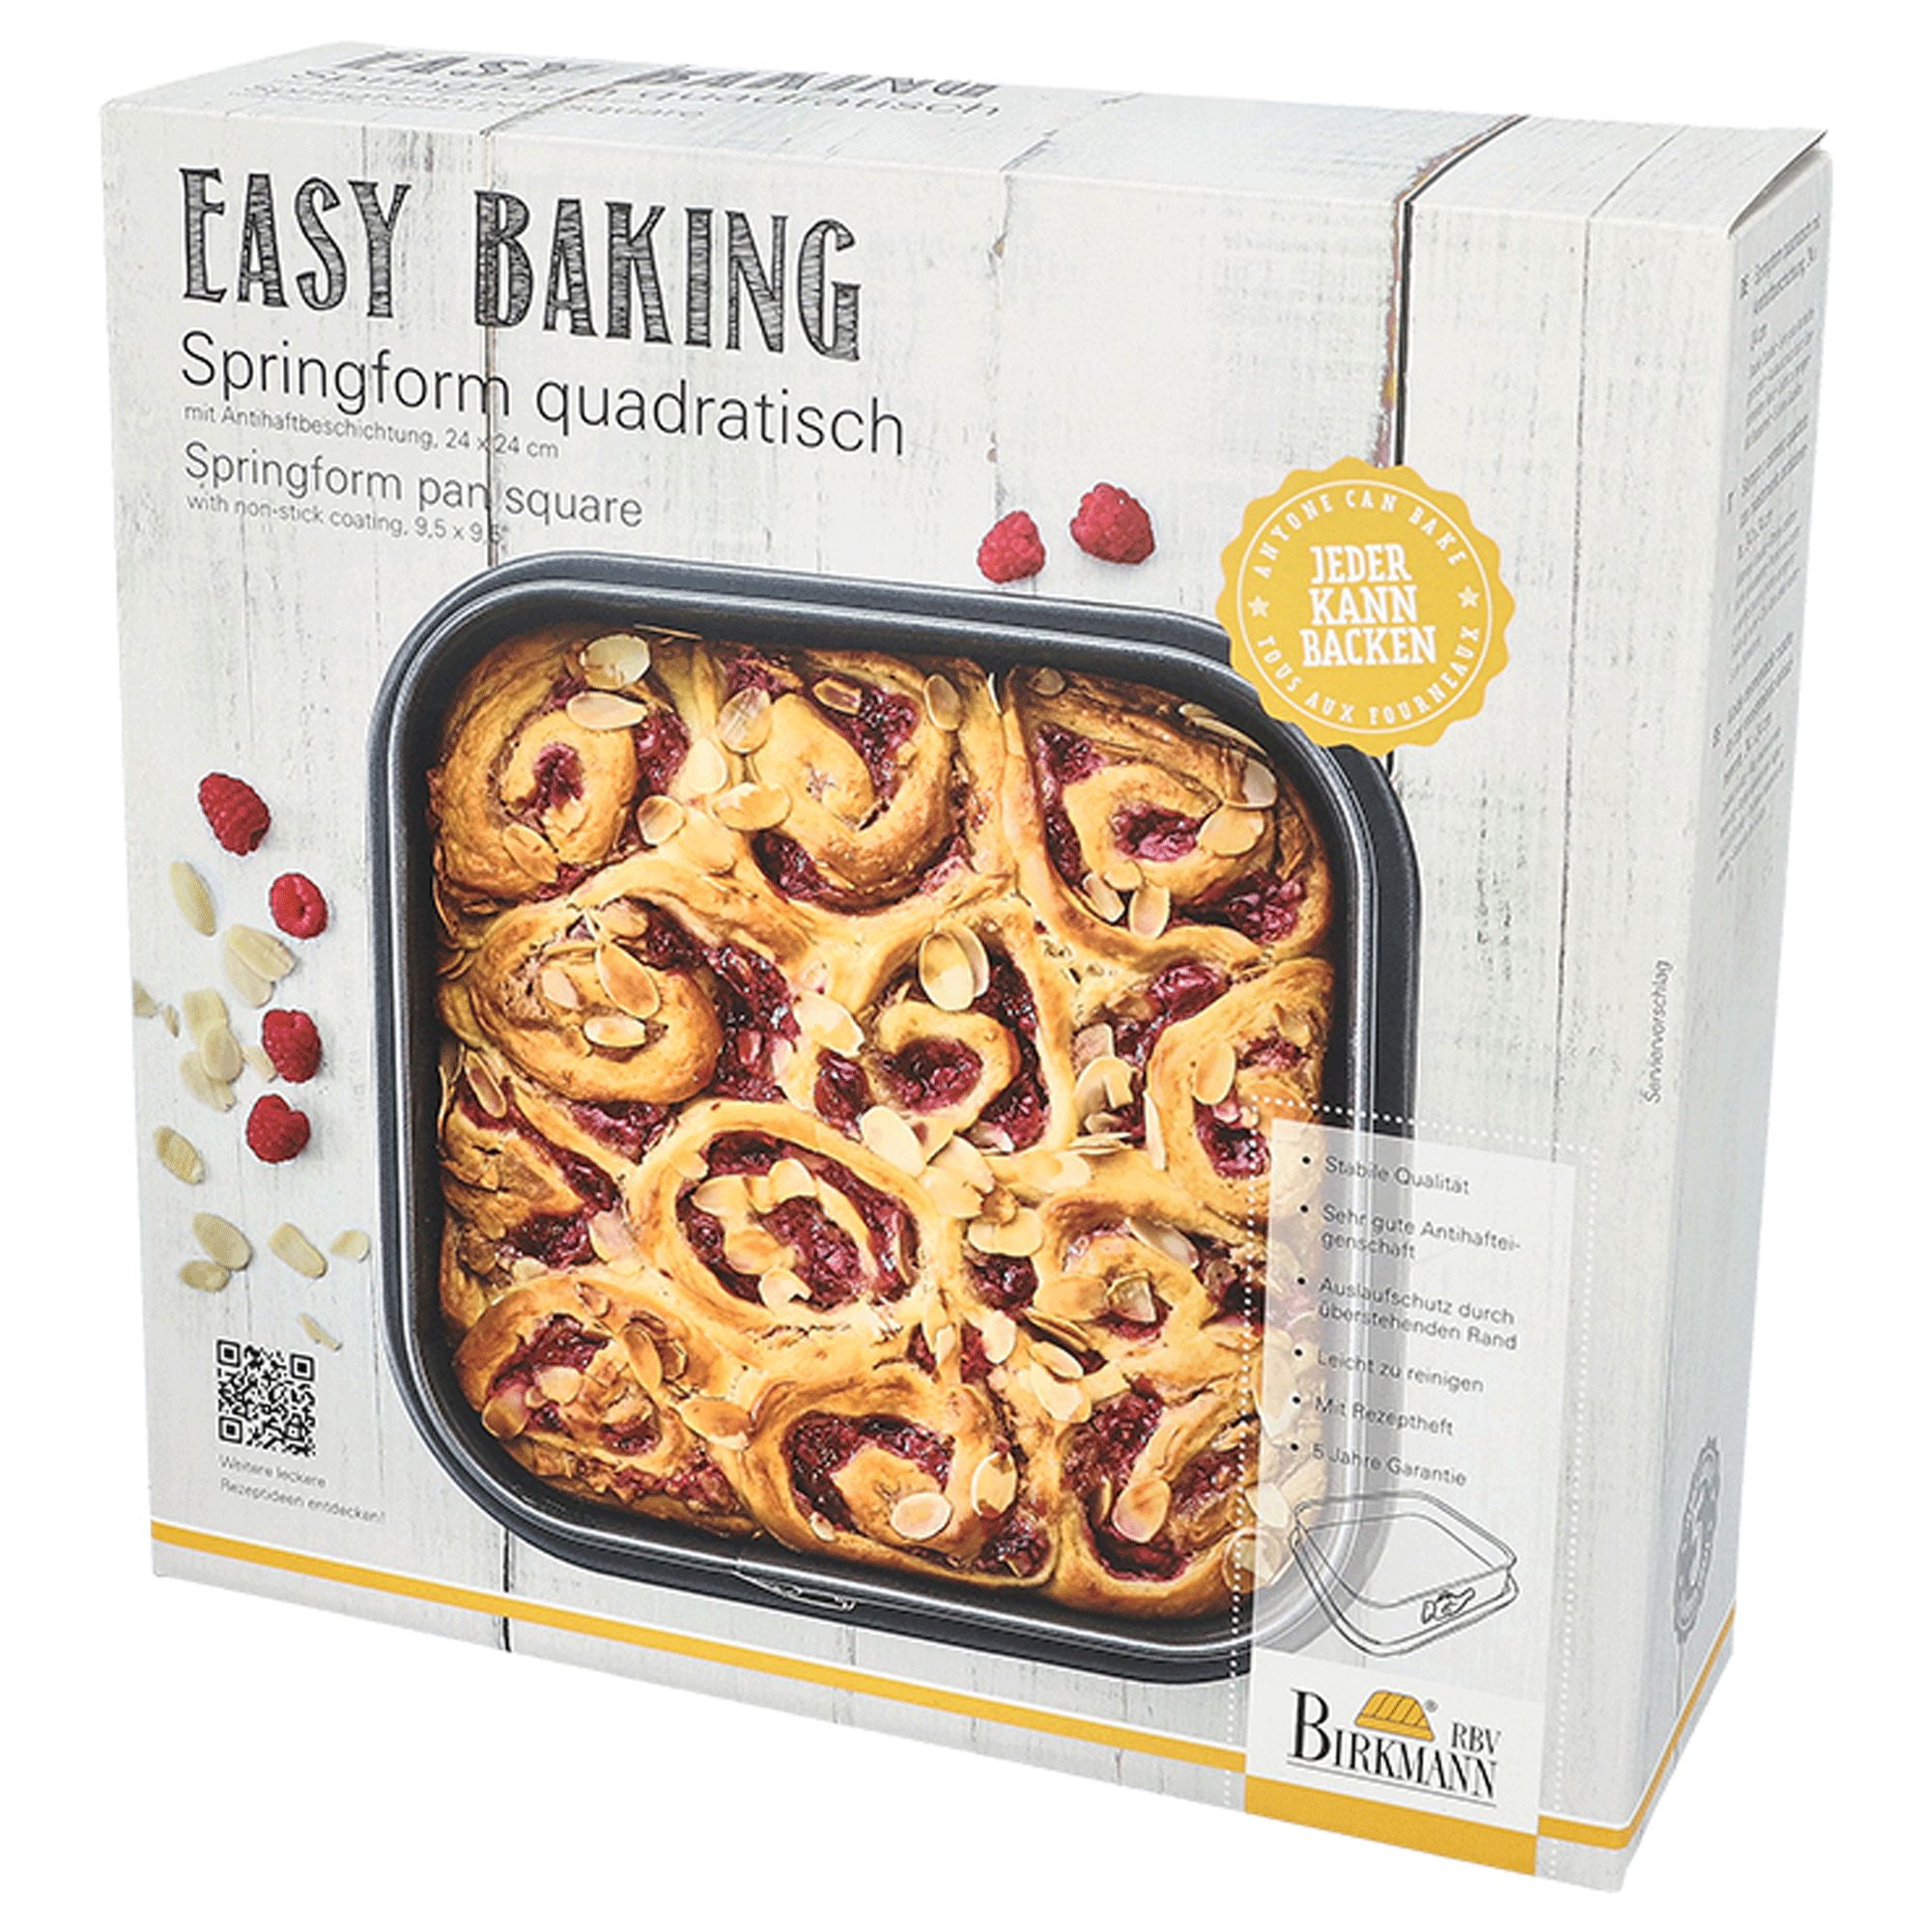 Birkmann - Springform quadratisch - Easy Baking